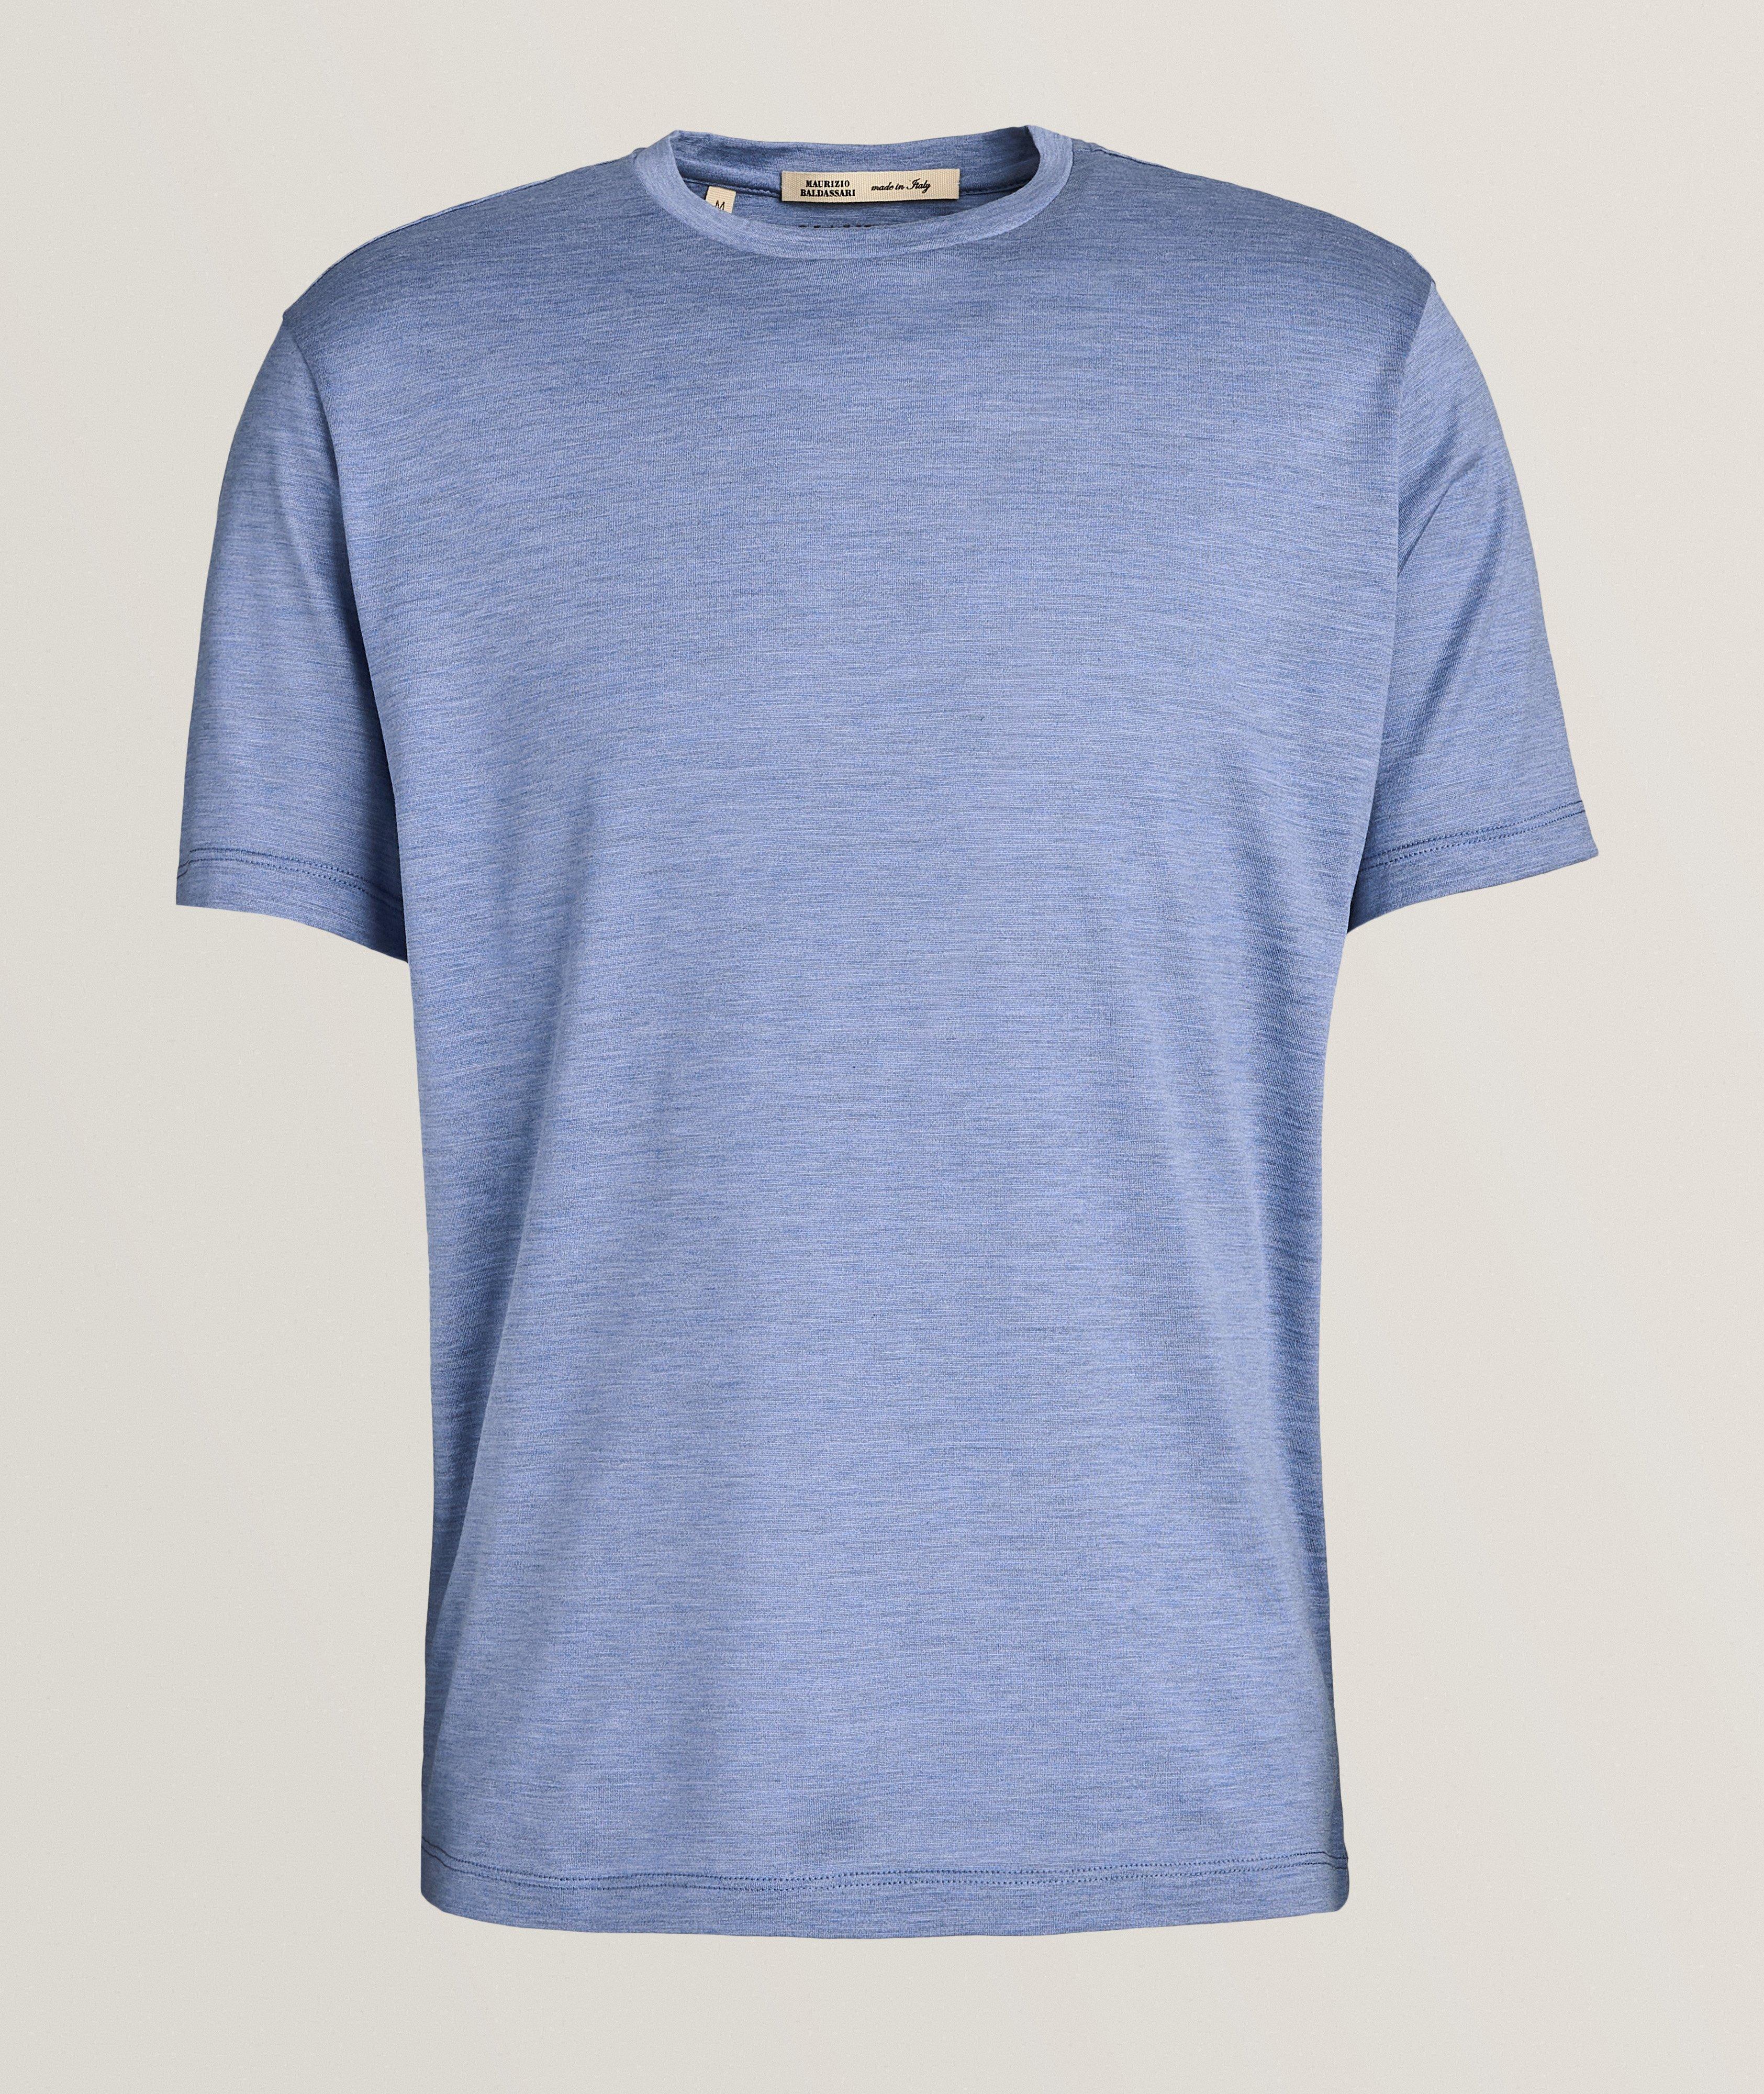 Heathered Silk-Cotton T-Shirt  image 0